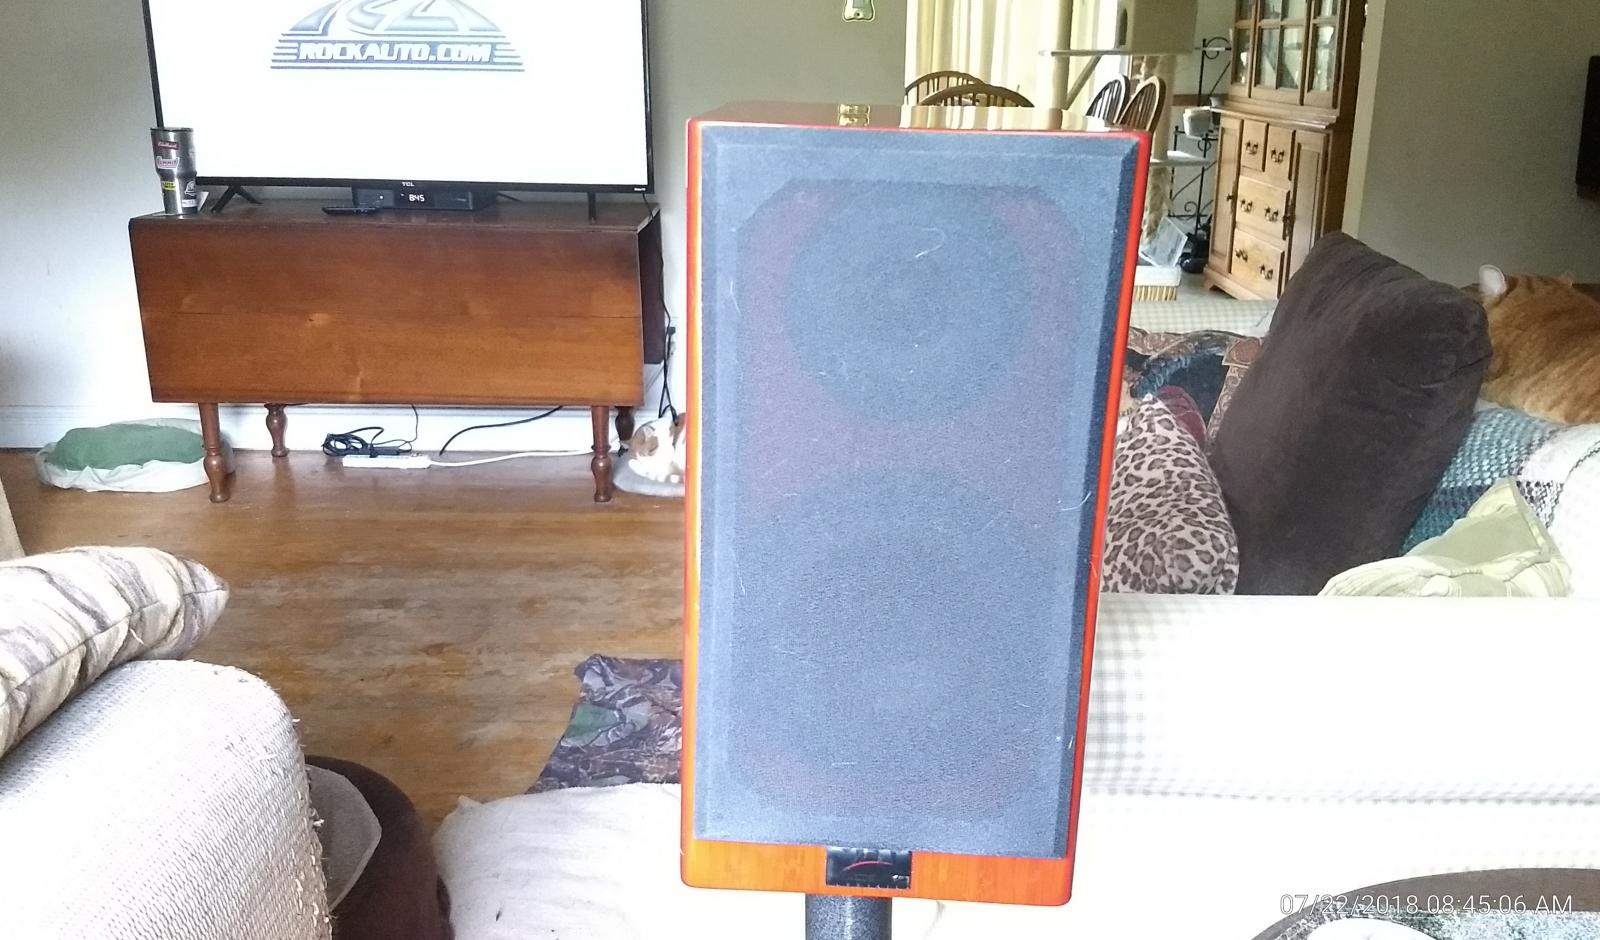 For sale Ascend Acoustic Sierra-1 Speakers